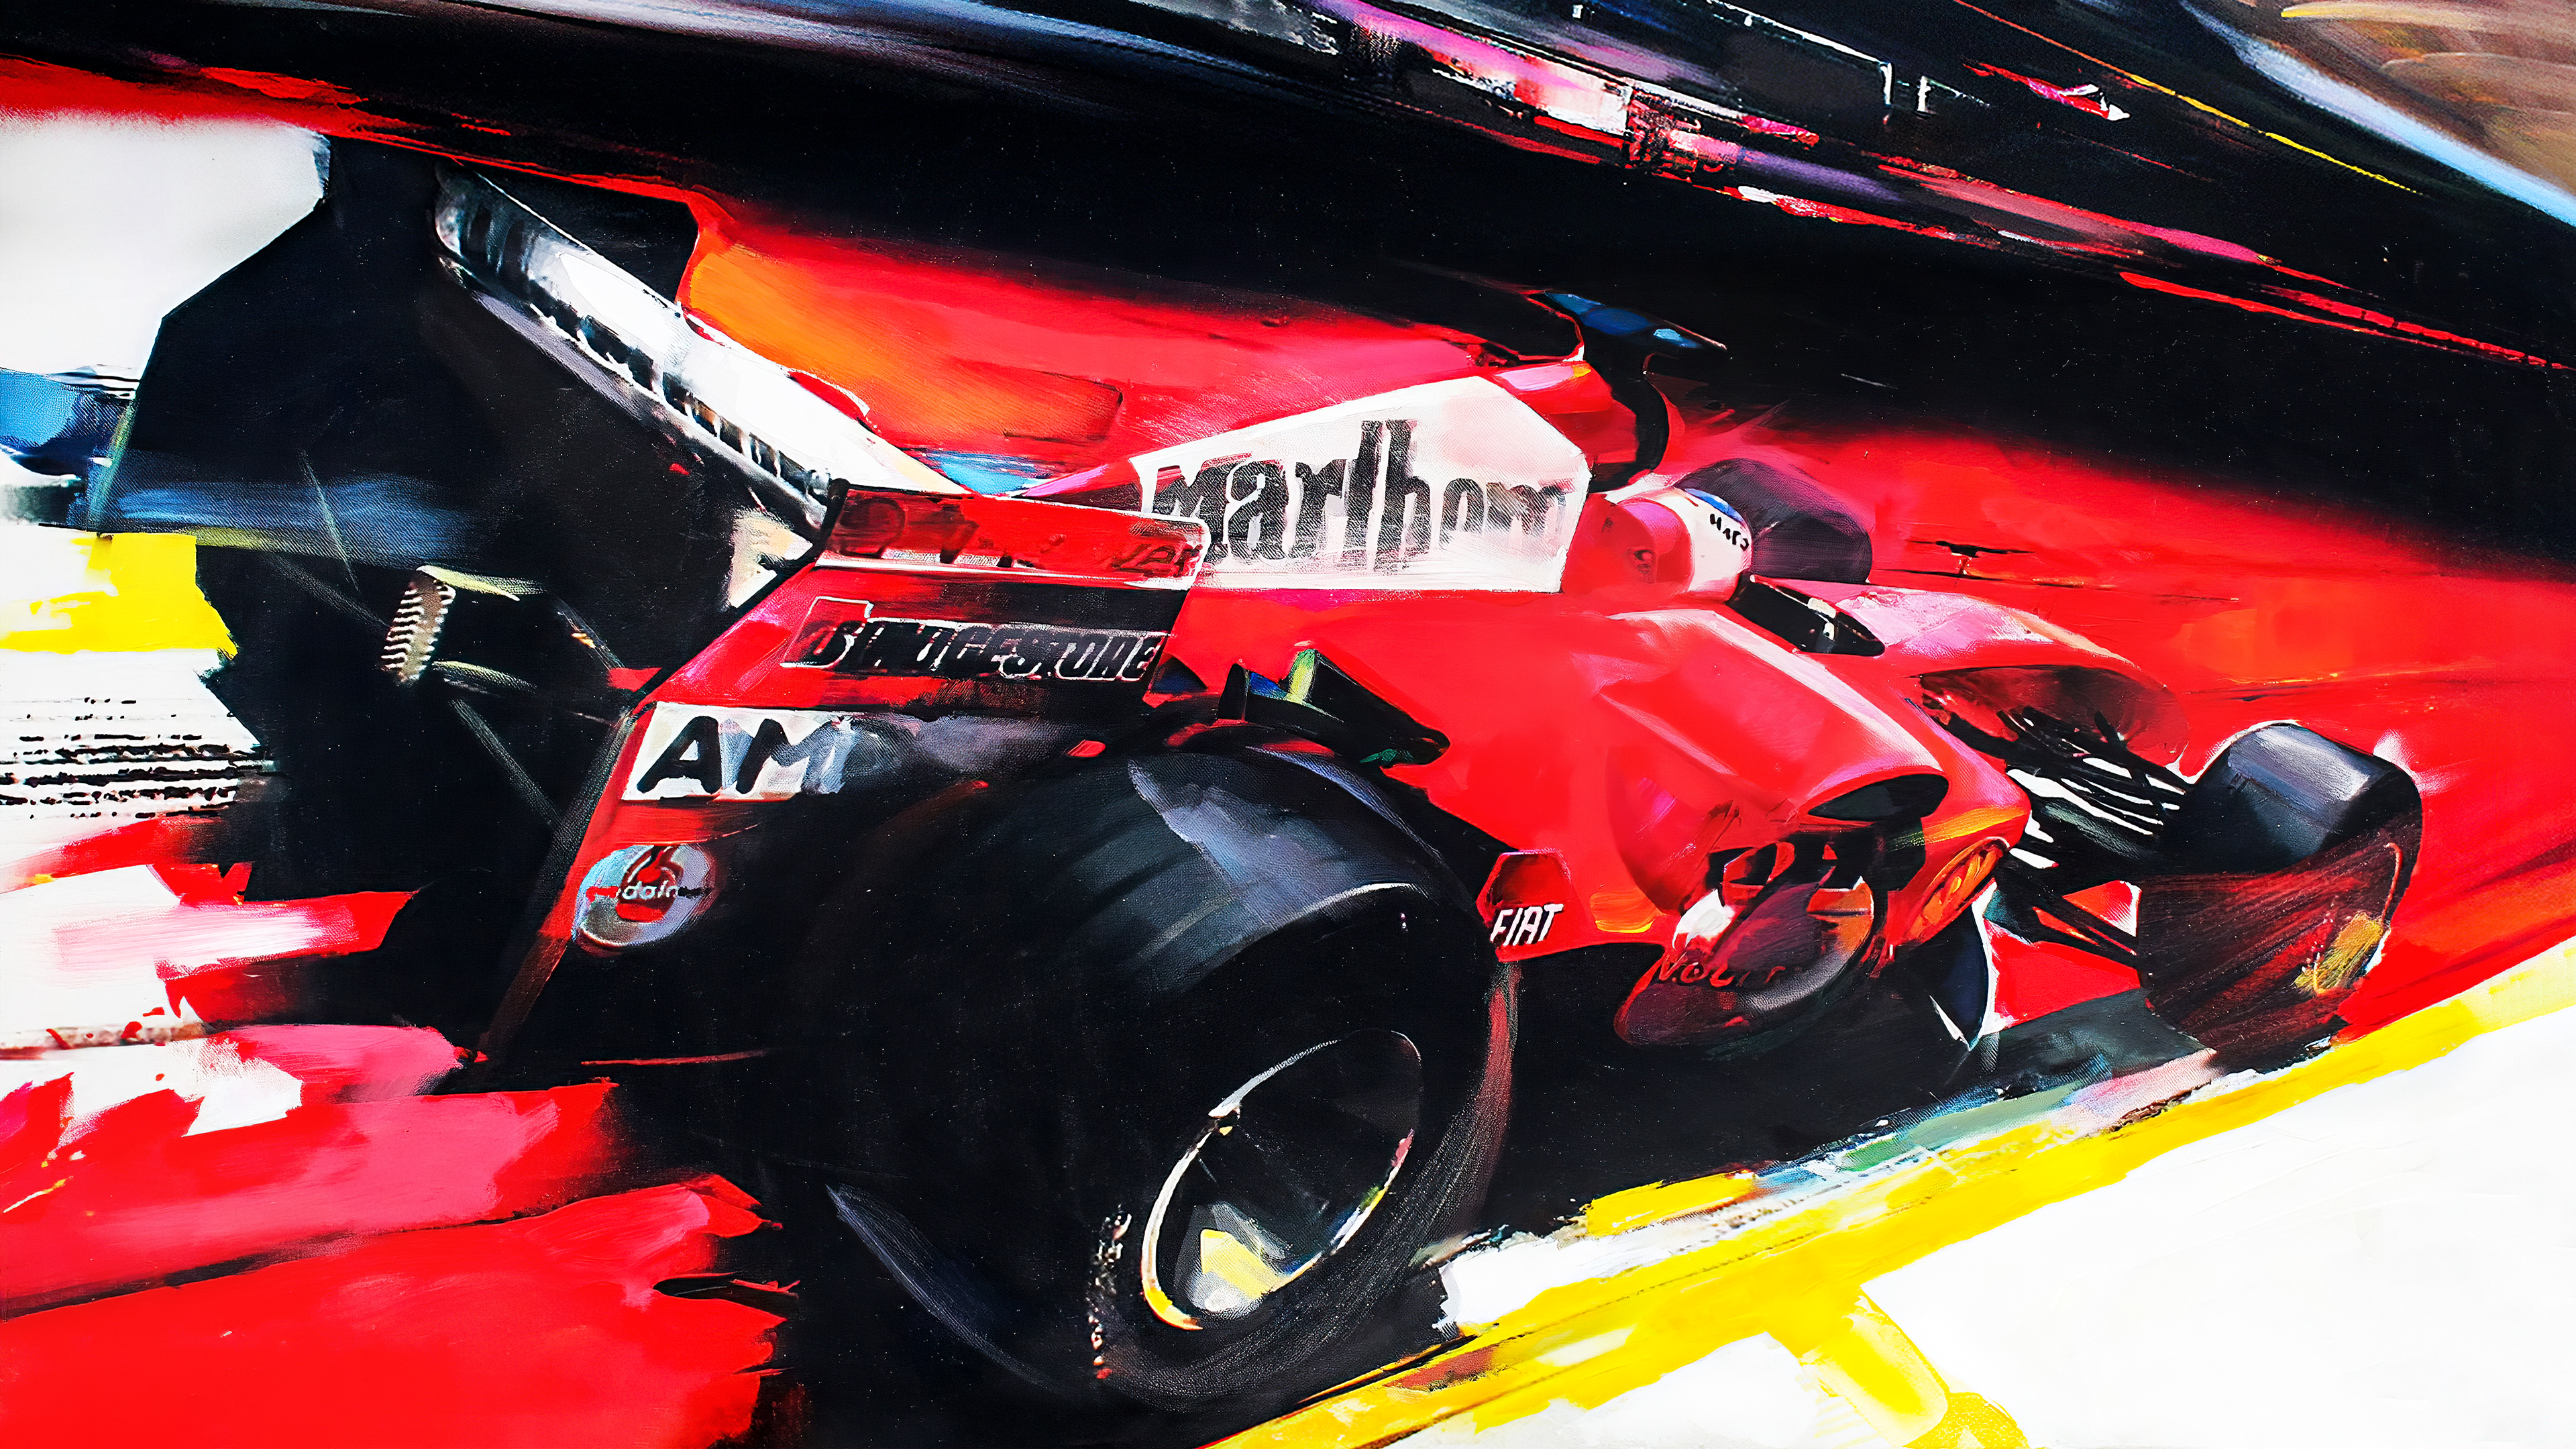 Ferrari F1 4k Ultra Hd Wallpaper Background Image 3840x2160